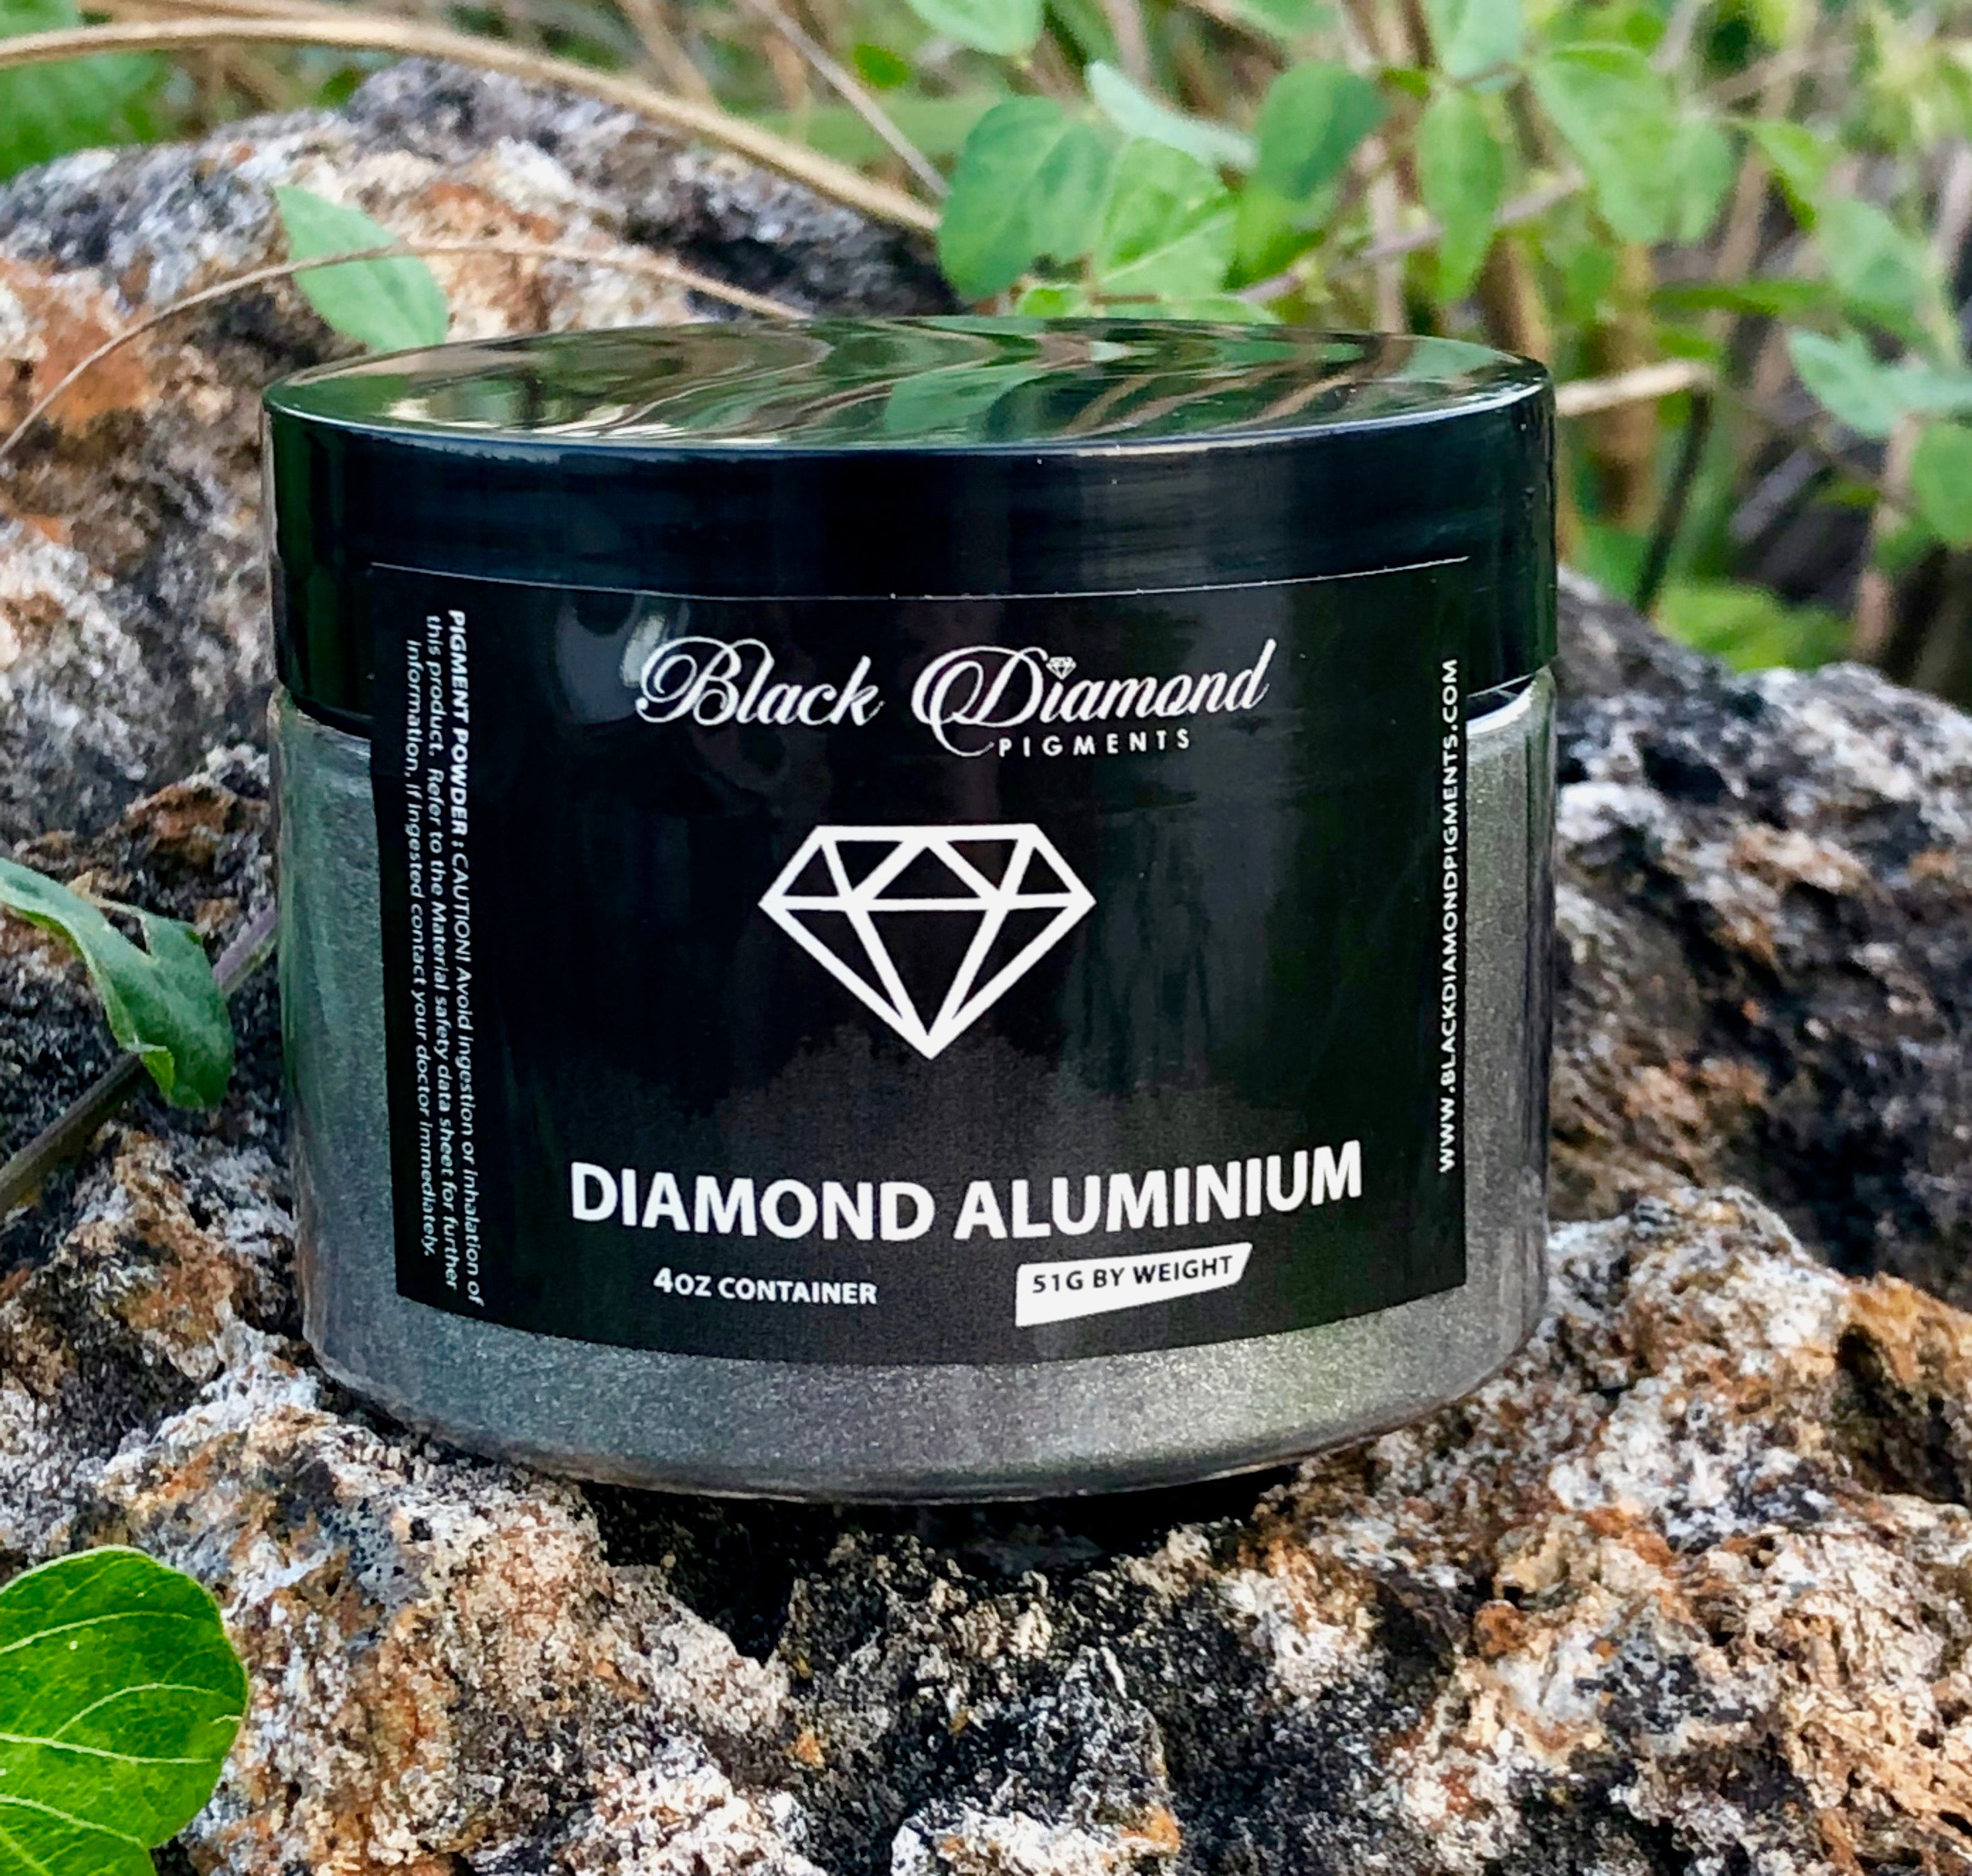 "DIAMOND ALUMINIUM" Black Diamond Pigments